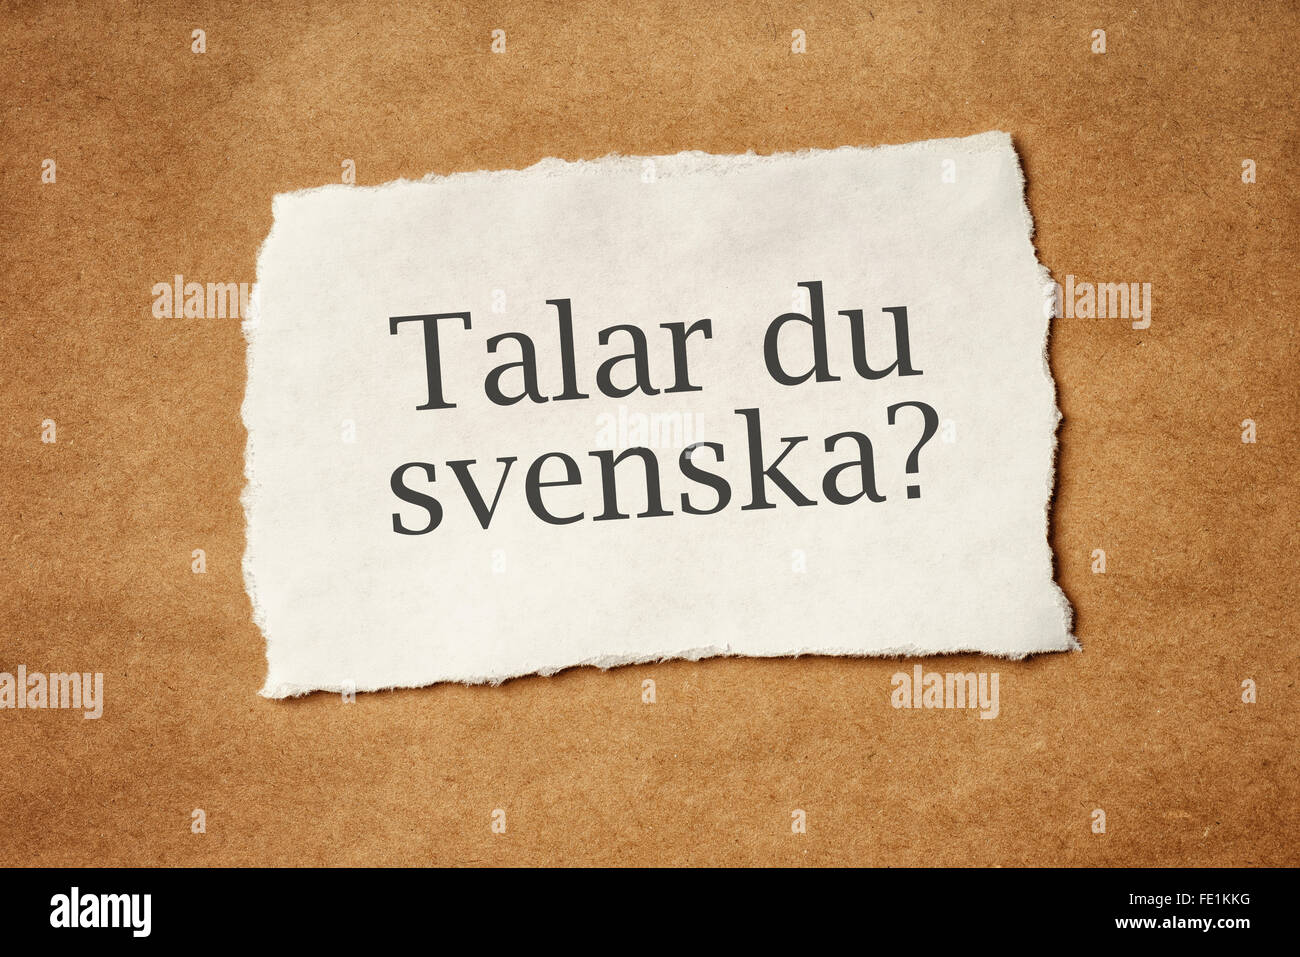 Talar du Svenska, Do you speak Swedish, question printed on piece of scrap paper, language school concept. Stock Photo